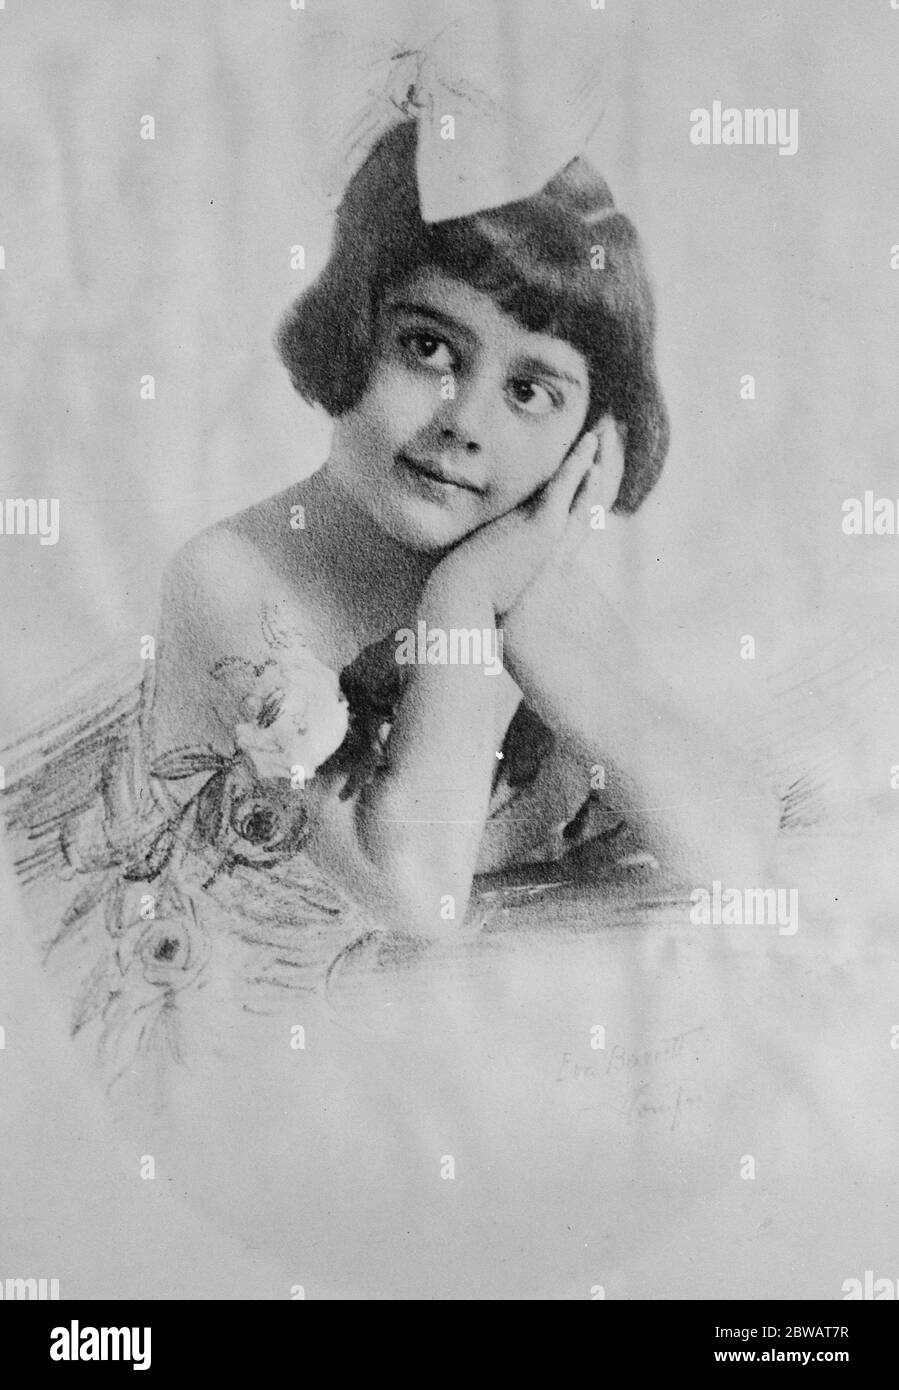 Princesse Maria d'Italie - Maria Francesca de Savoie la quatrième fille du roi Victor Emmanuel III d'Italie 13 avril 1922 Banque D'Images